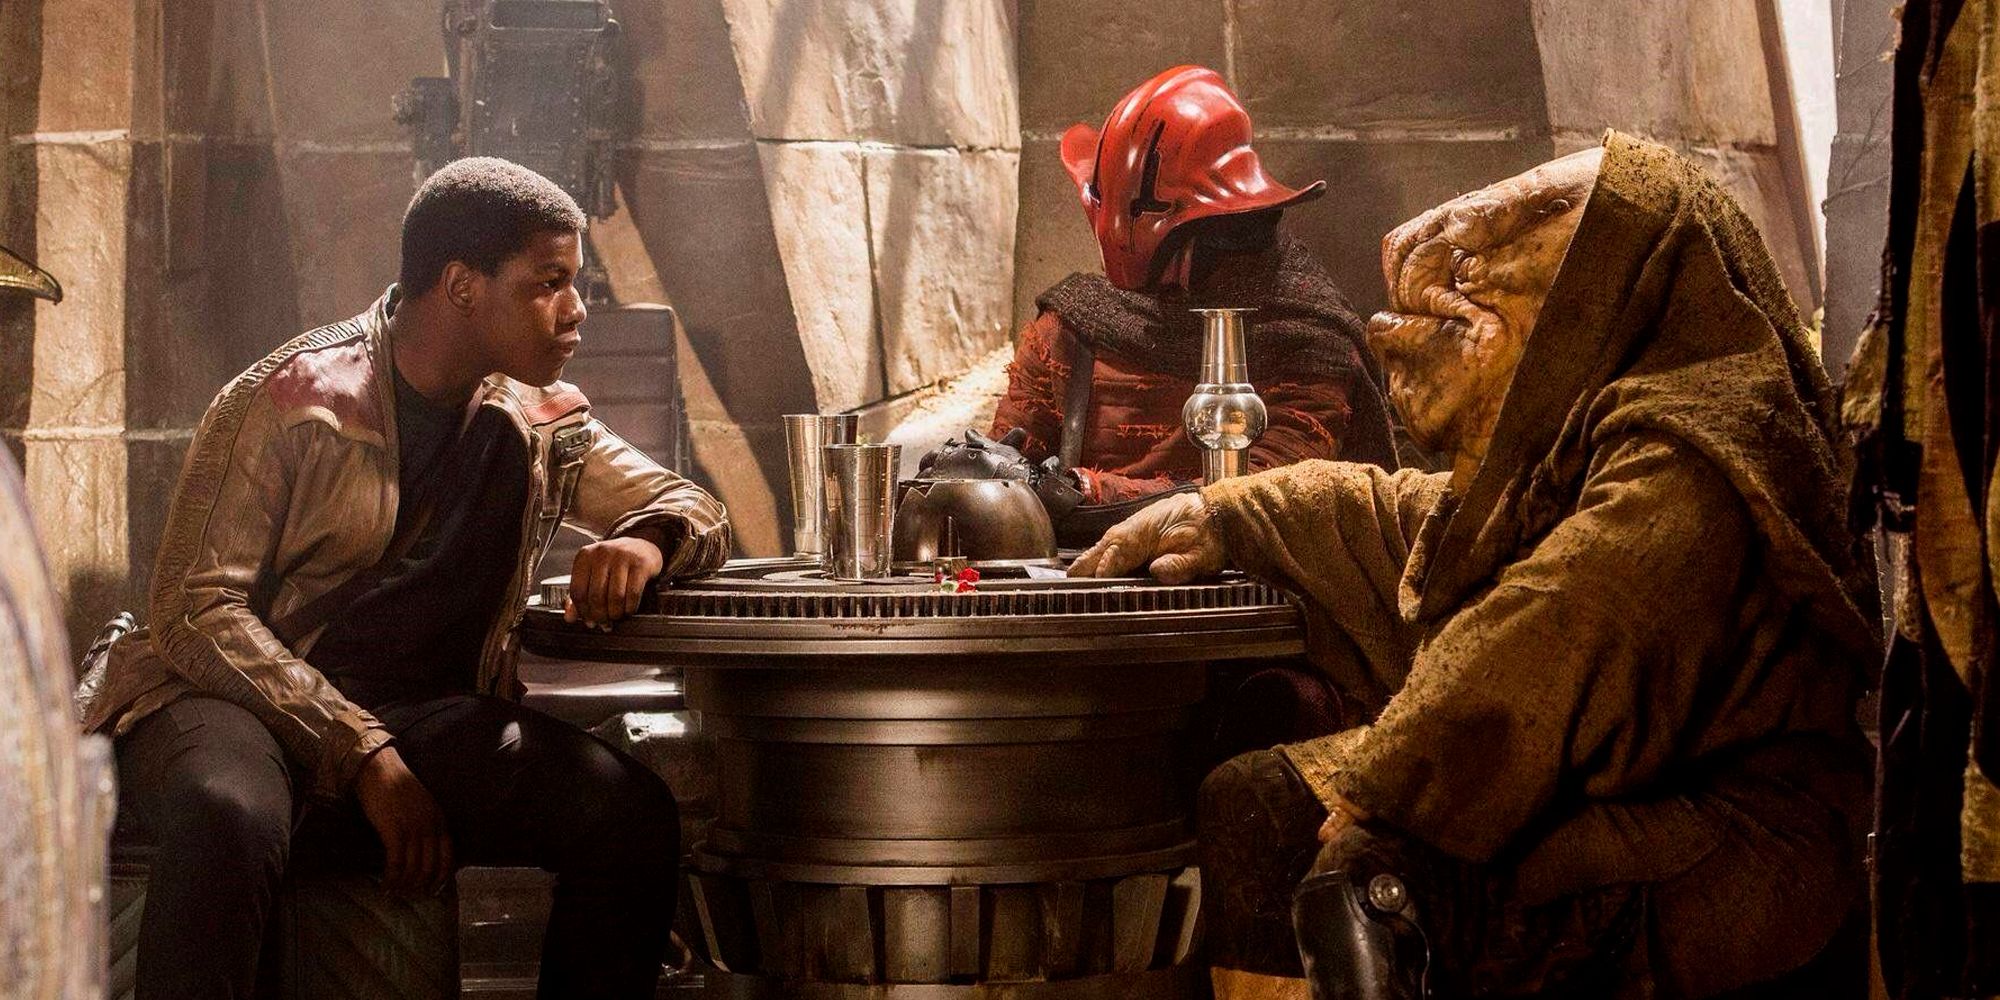 John Boyega Is Right The Star Wars Sequel Trilogy Failed Finn & Him